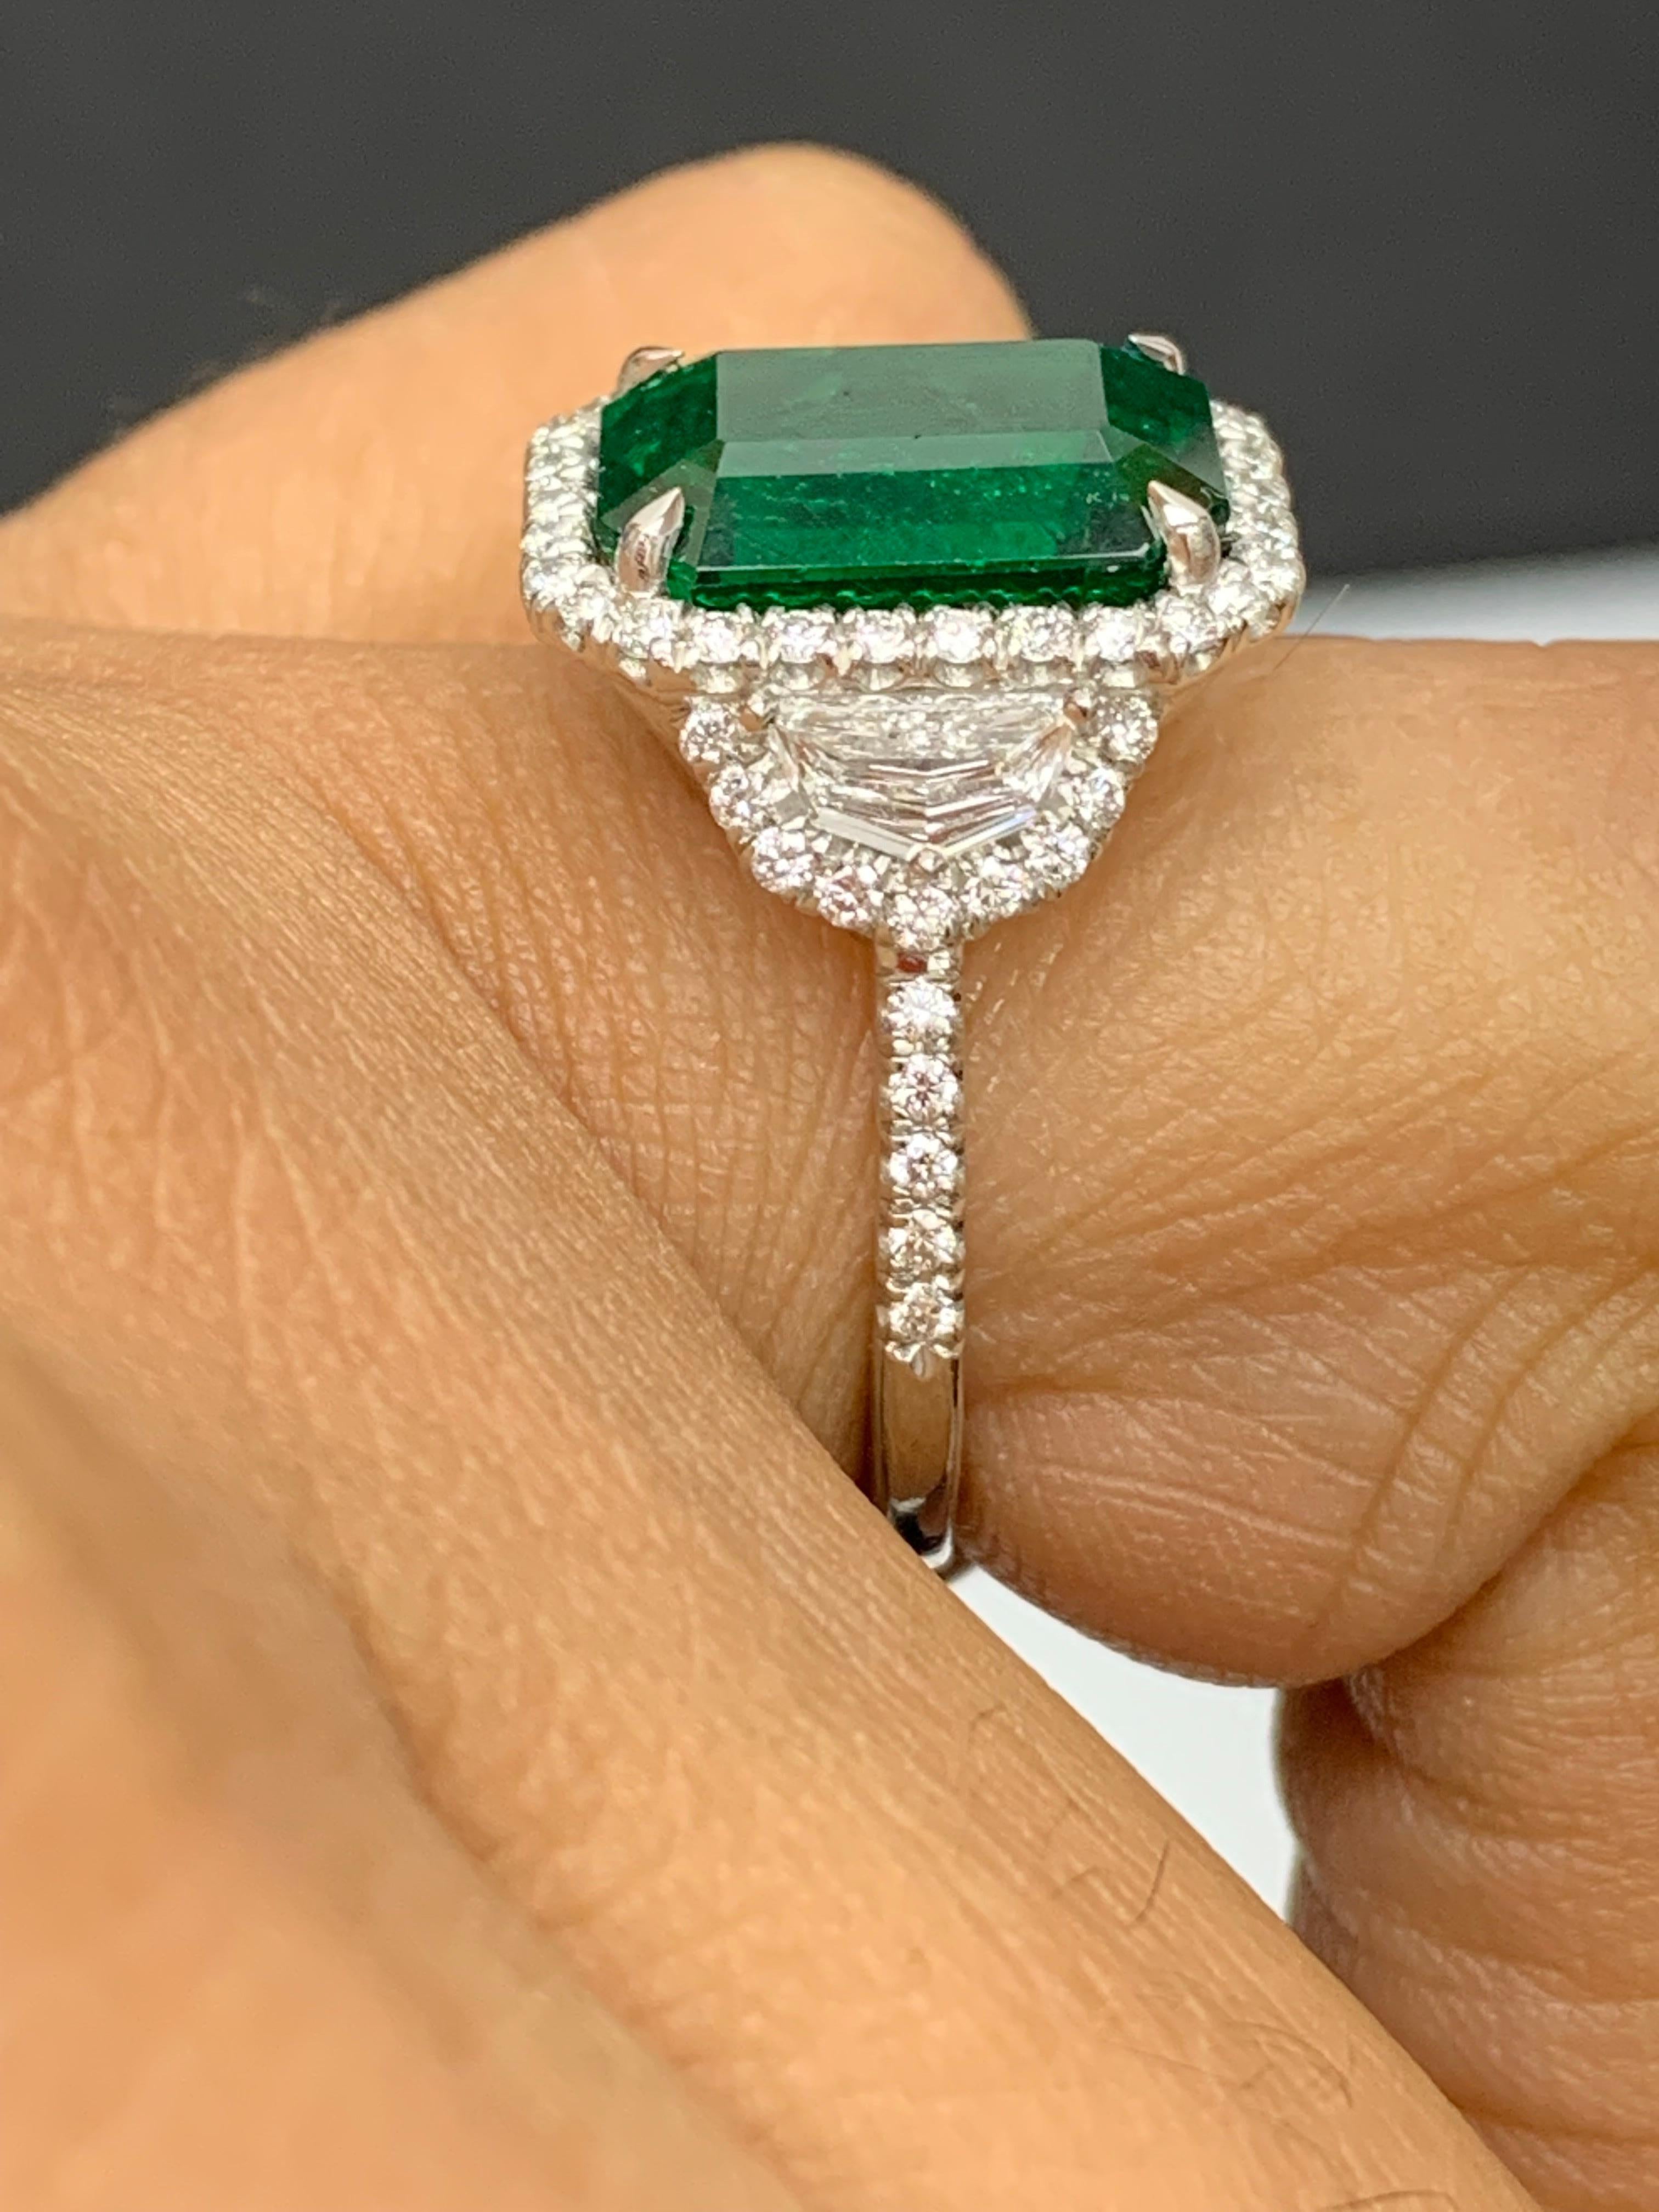 GIA Certified 4.07 Carat Emerald Cut Emerald Diamond 3 Stone Ring in Platinum For Sale 3